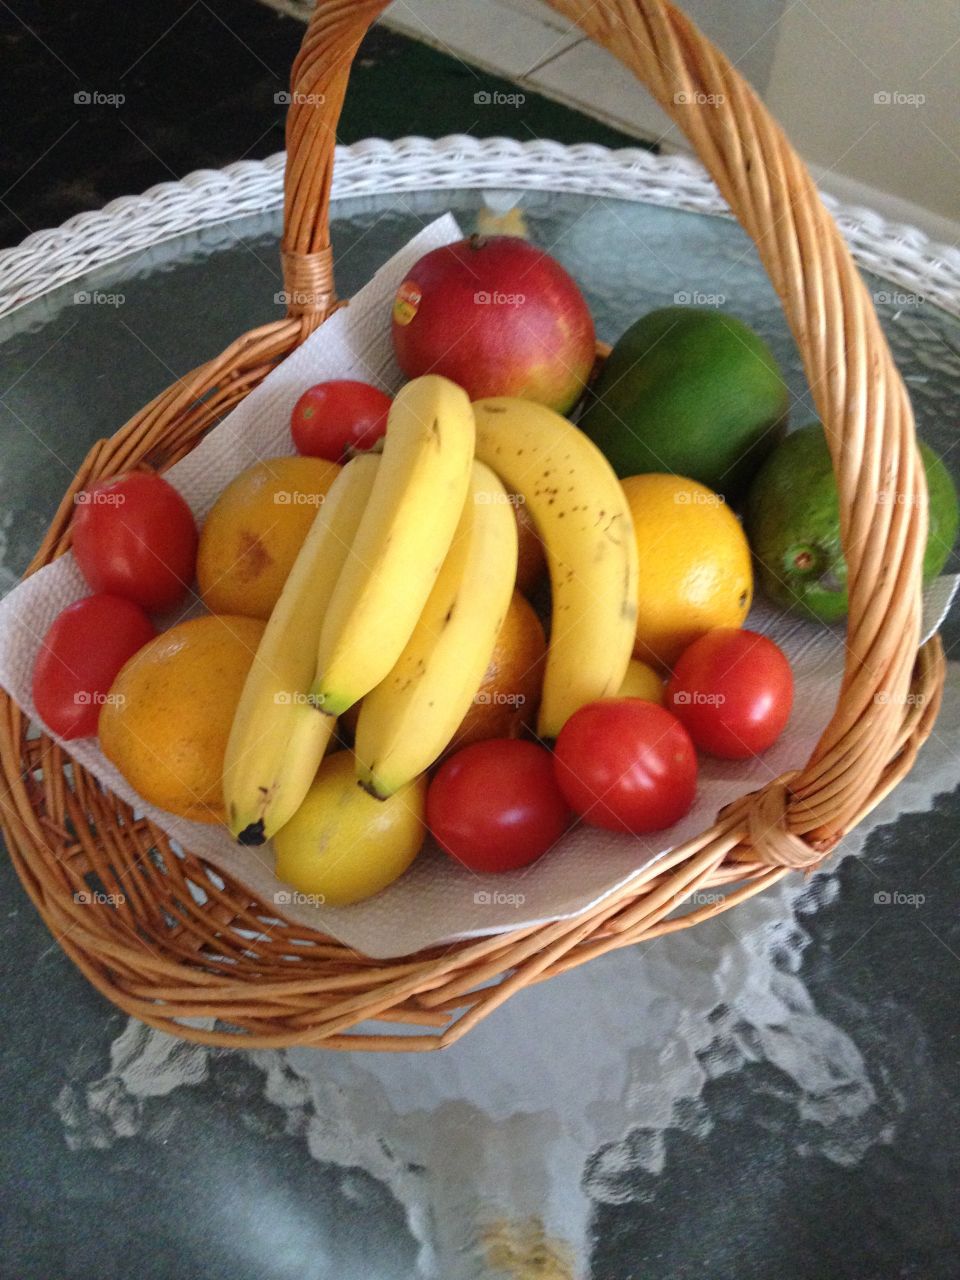 Fruit basket #2